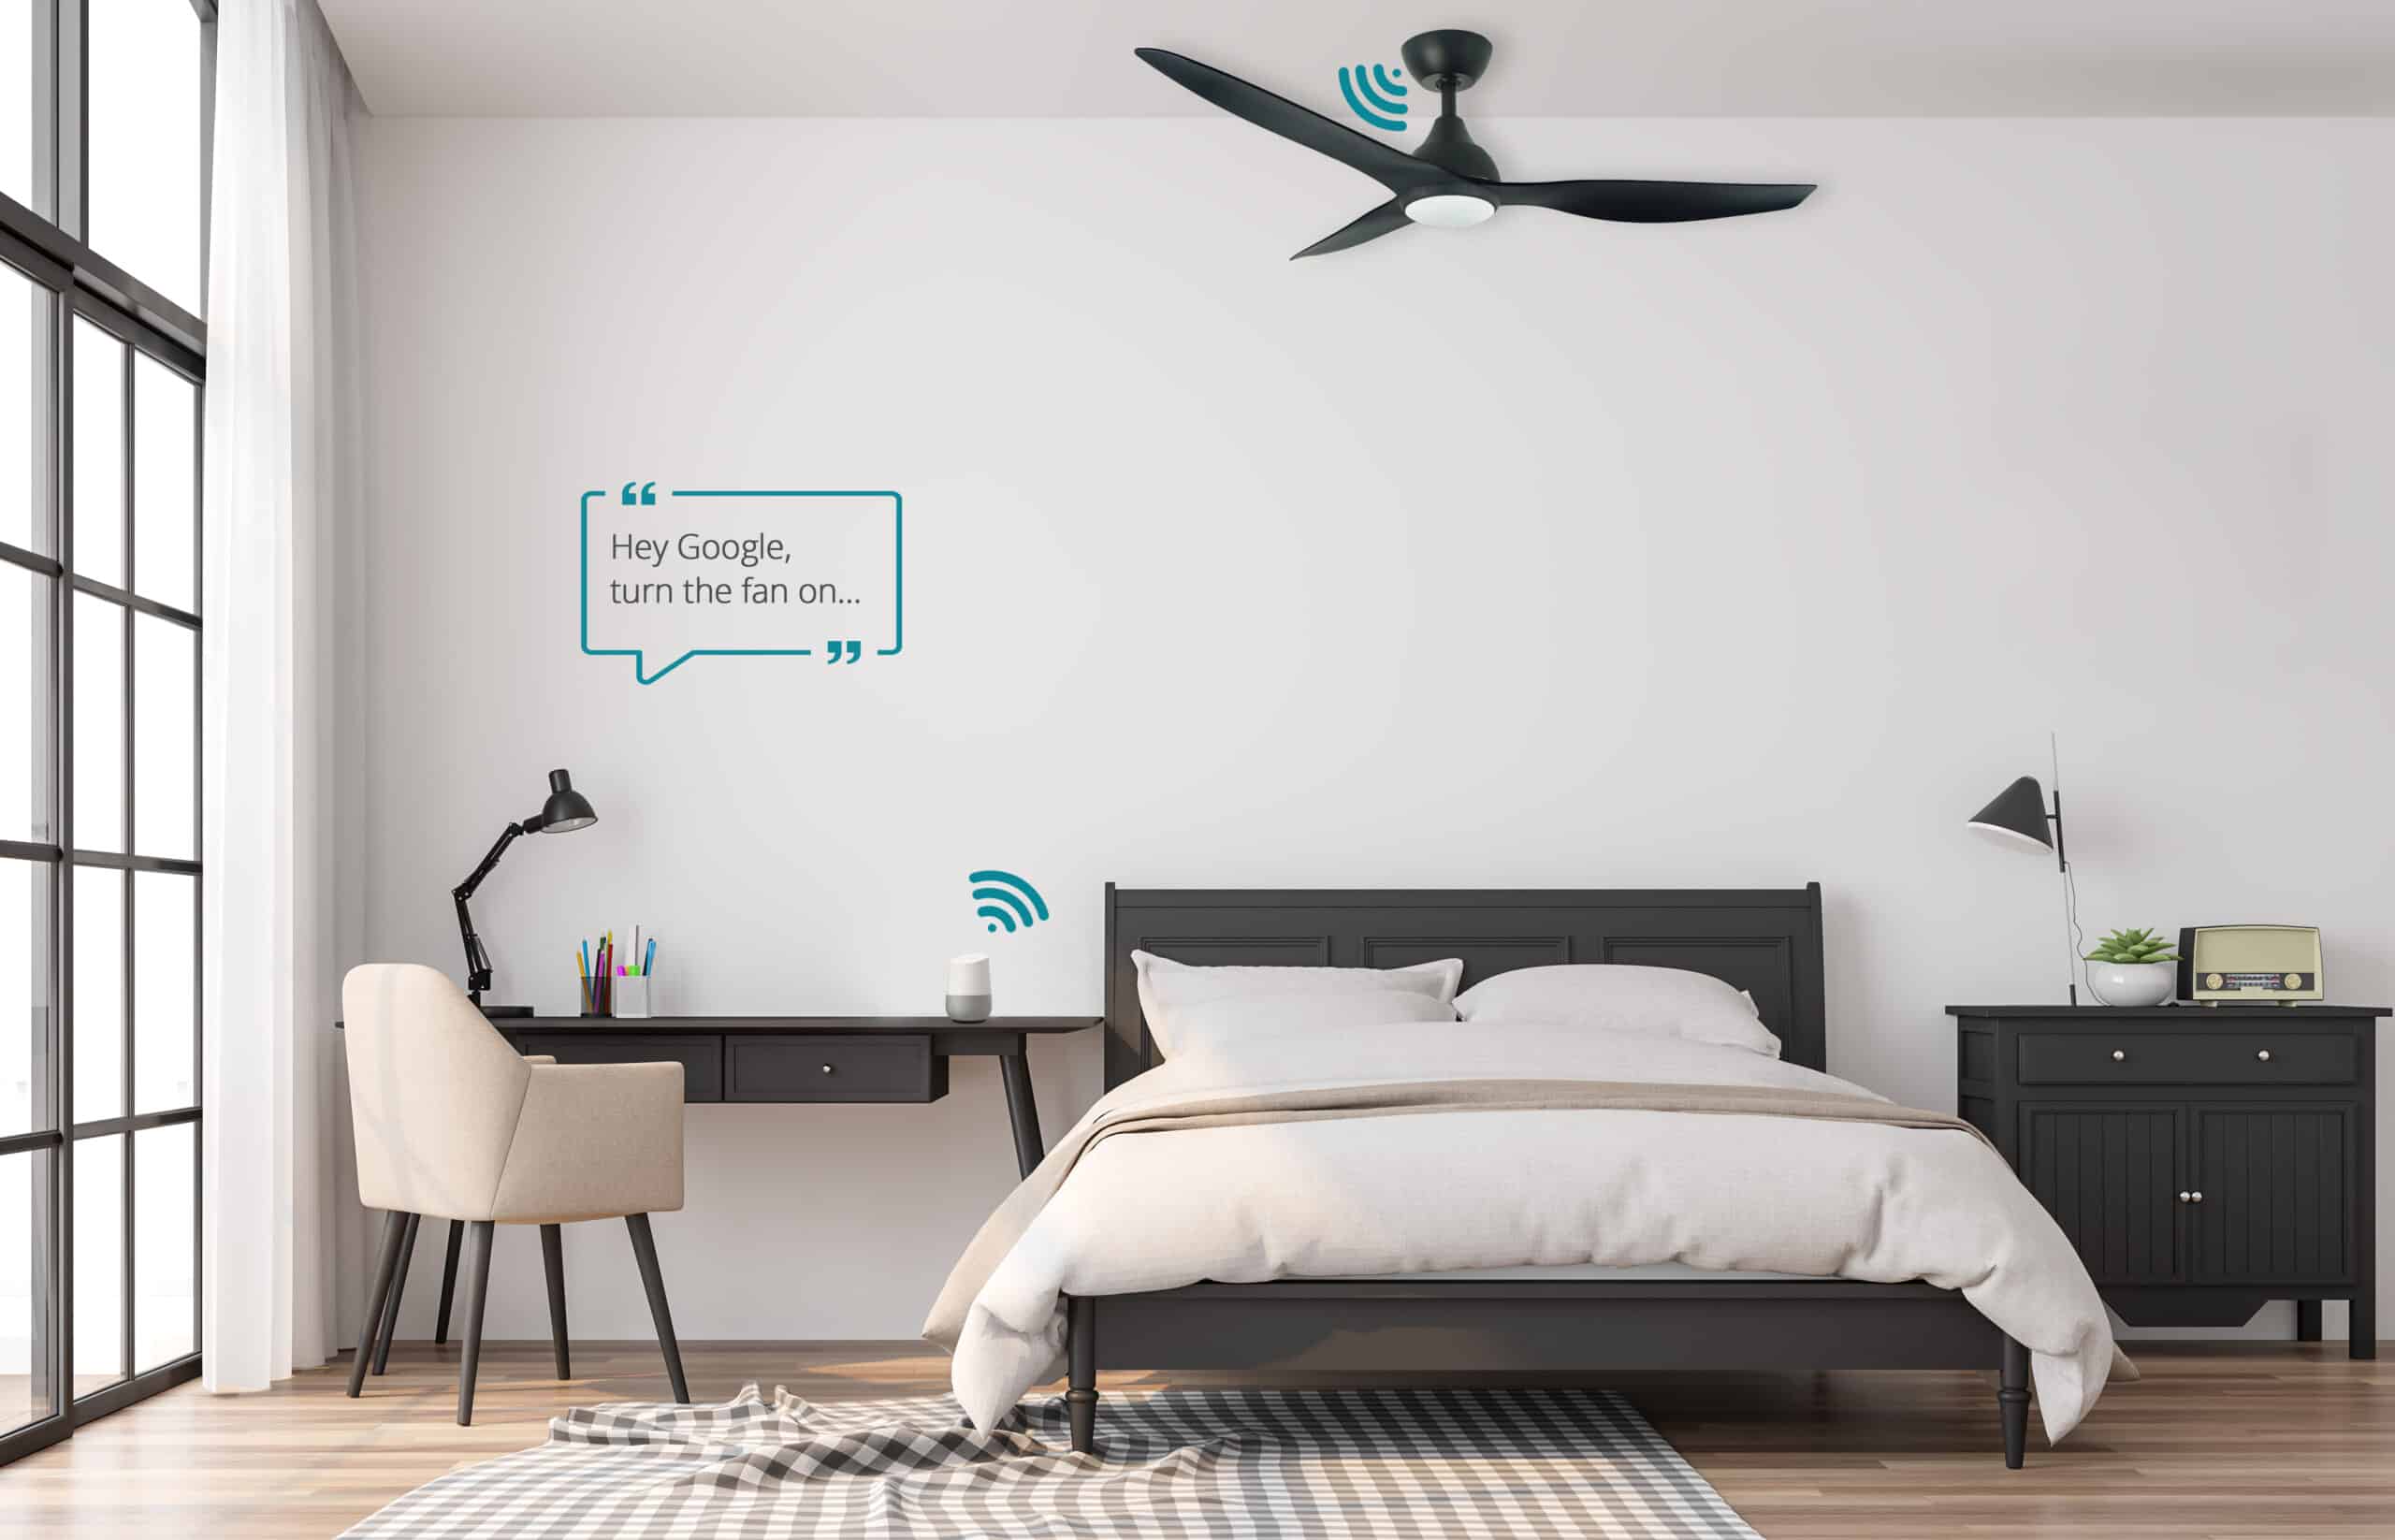 Martec Smart Ceiling Fans for Perfect Comfort